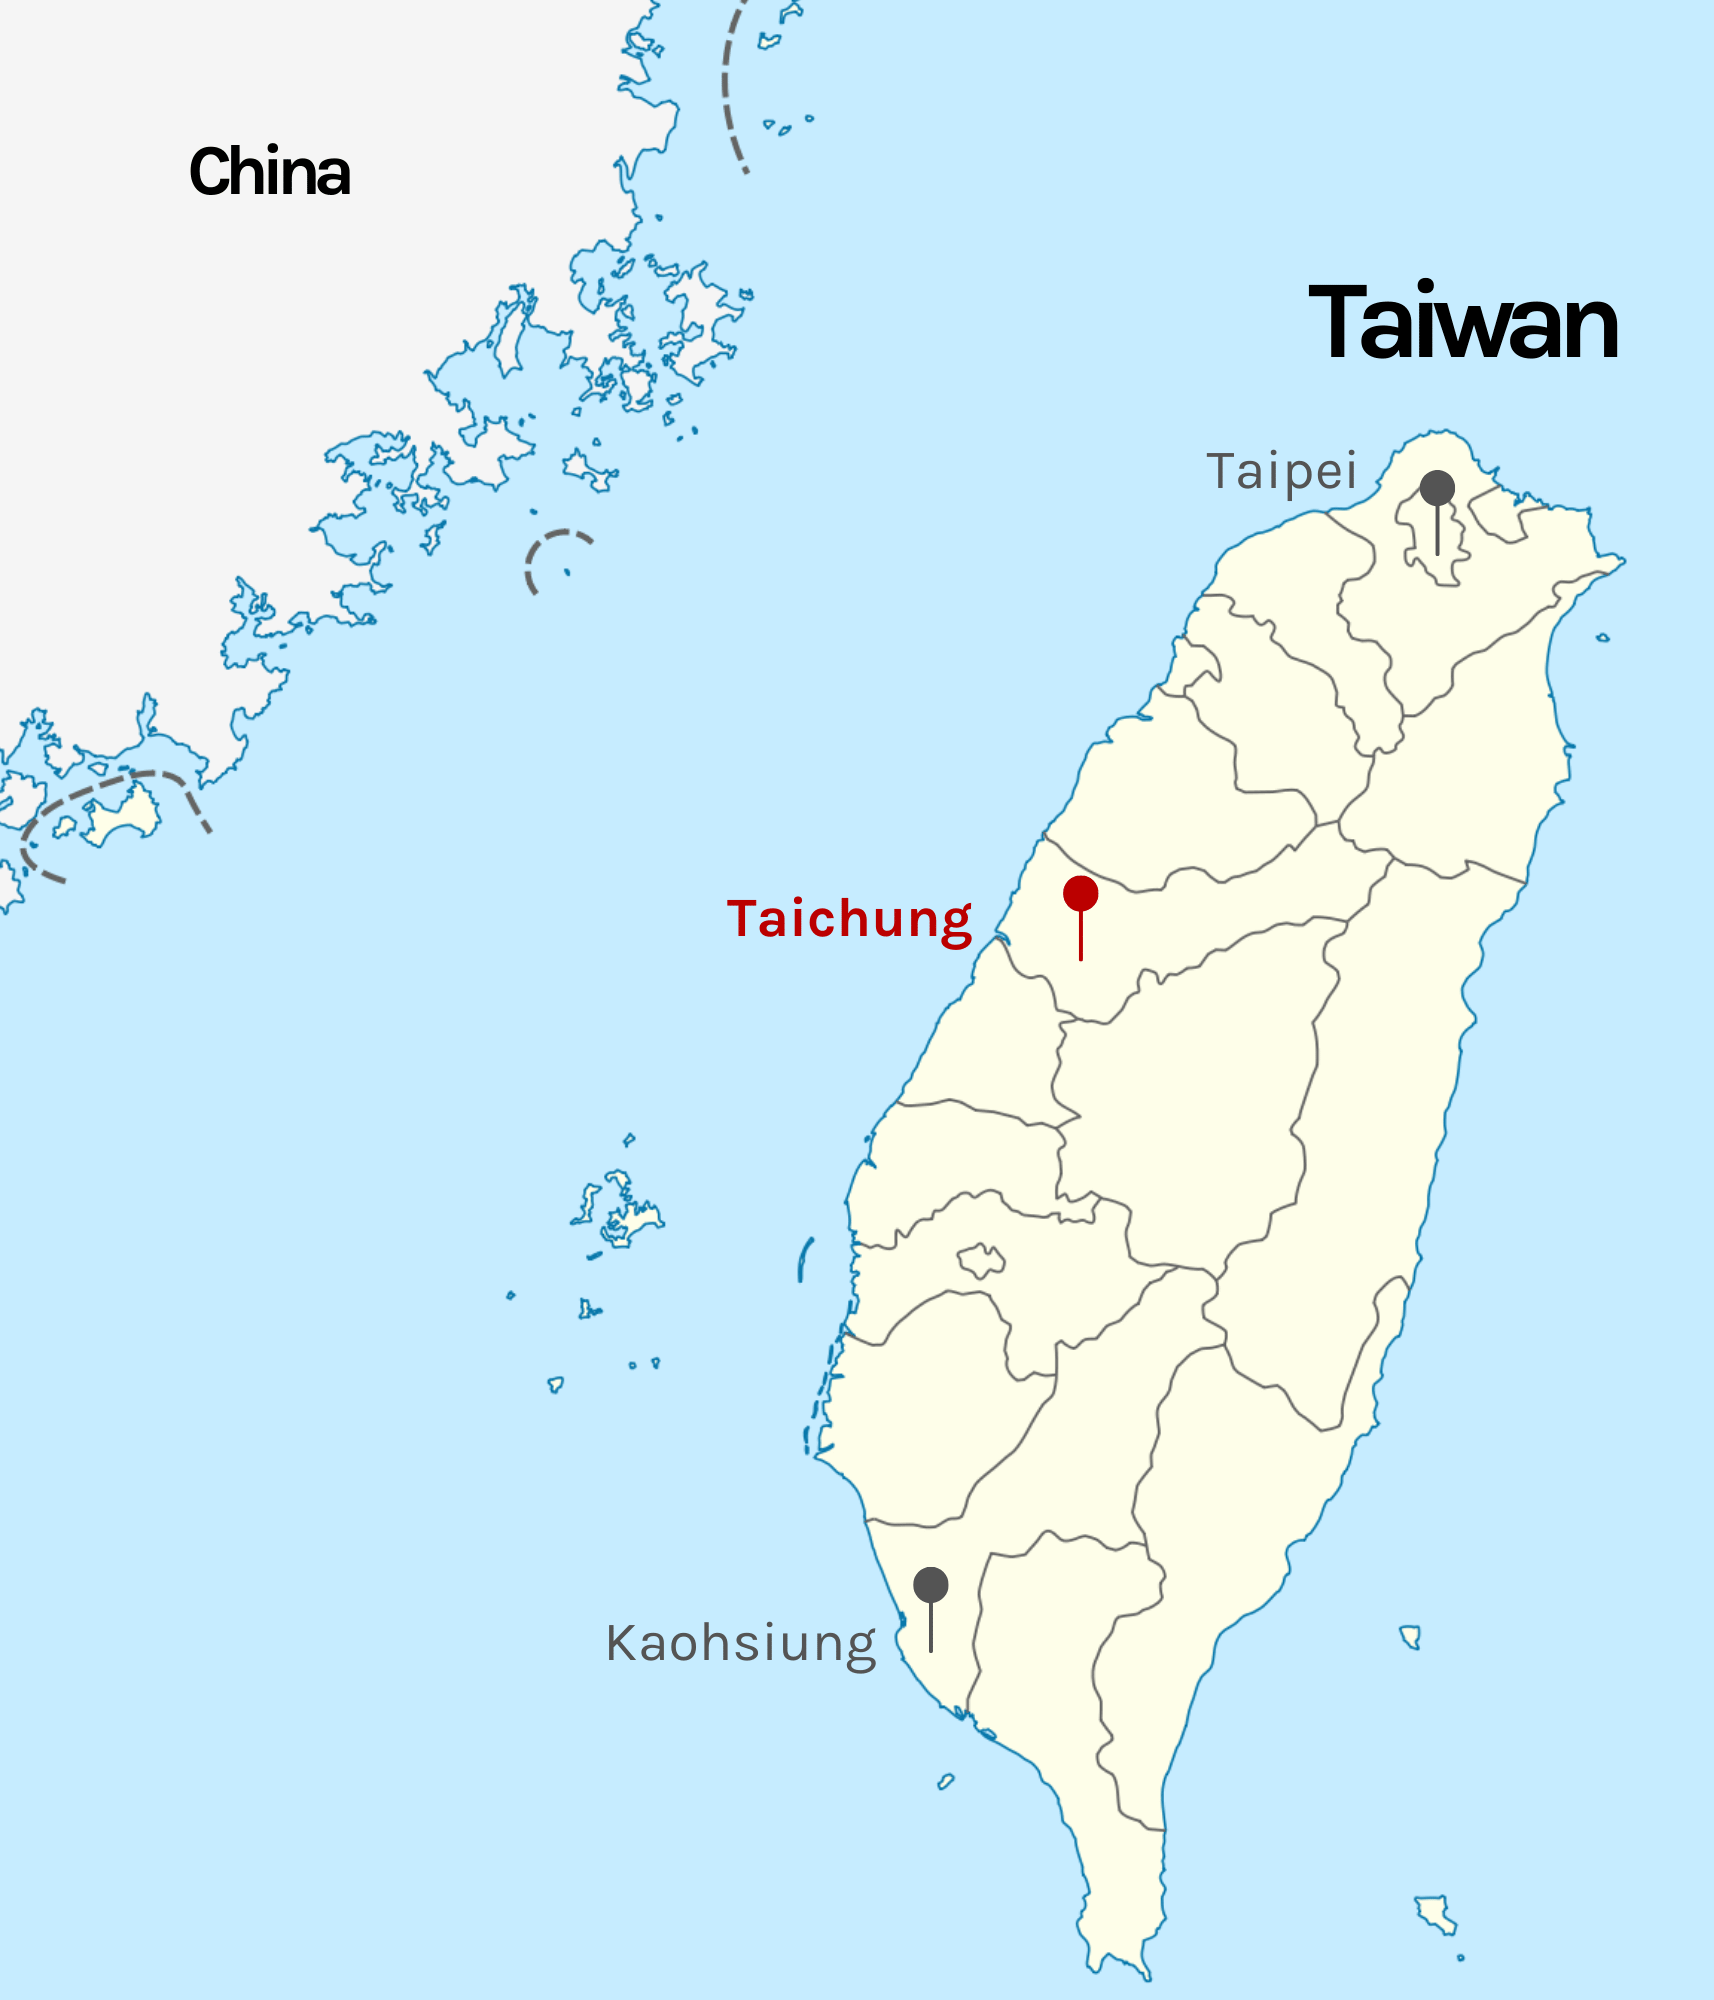 Taipei marked on map of Taiwan